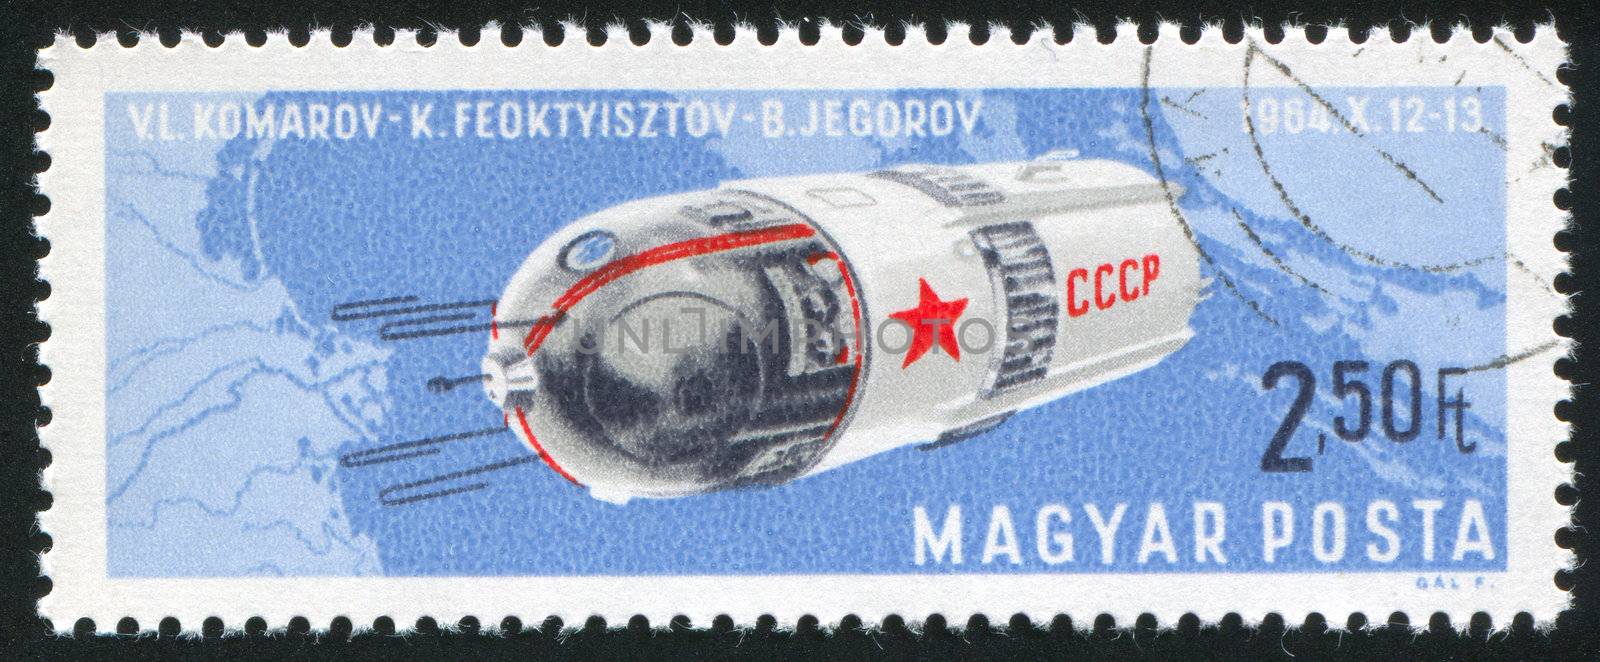 HUNGARY - CIRCA 1966: stamp printed by Hungary, shows Space craft, Voskhod, circa 1966